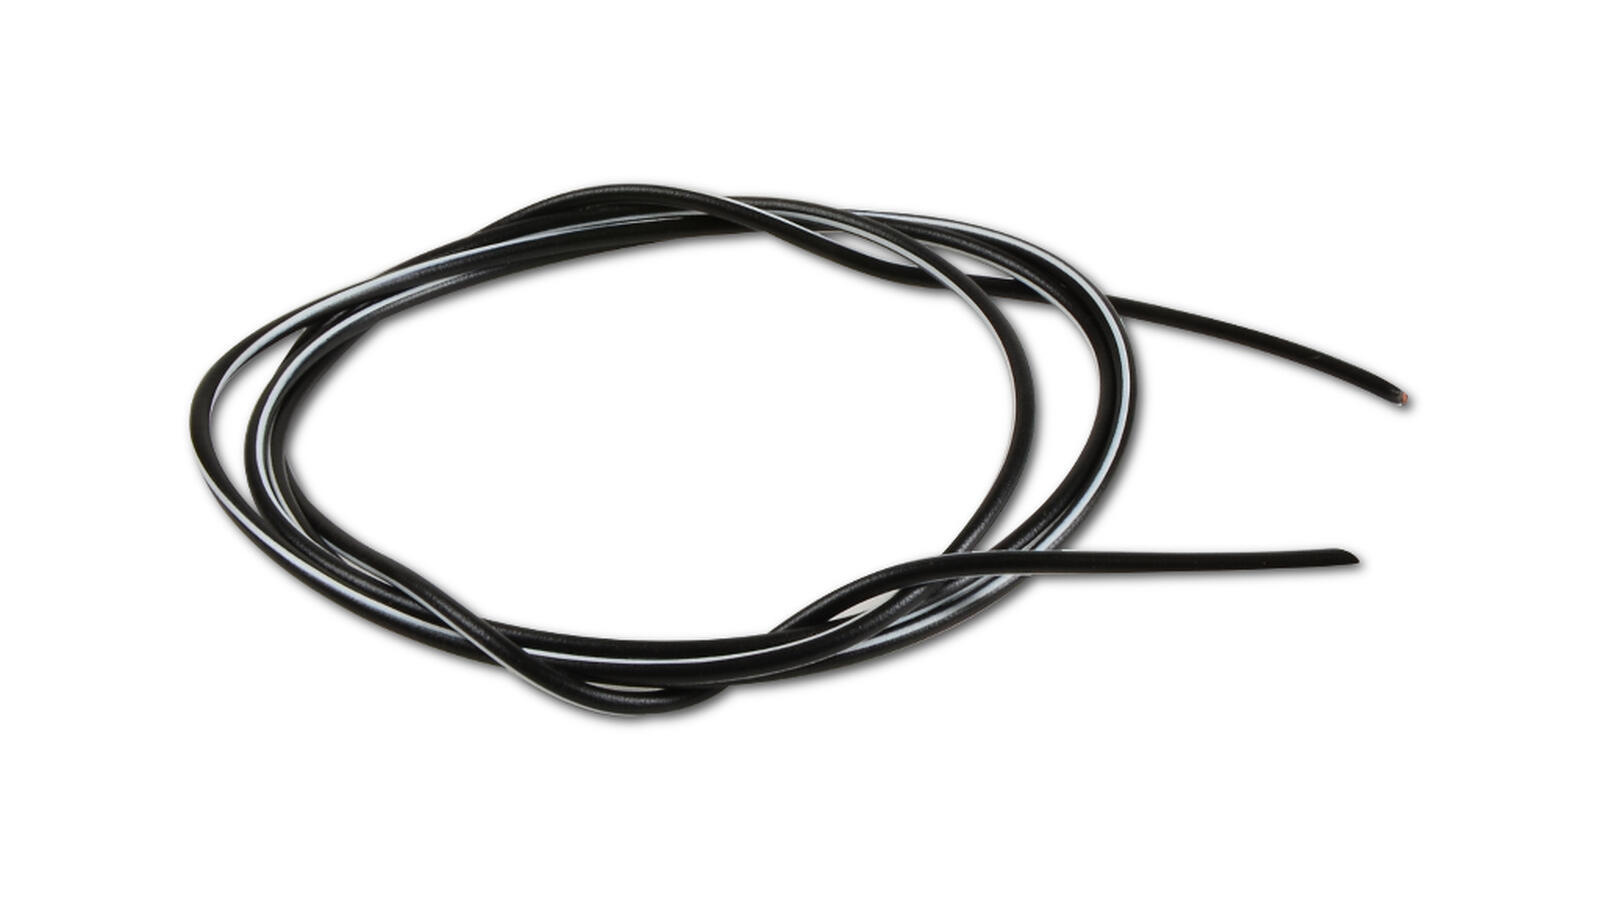 Kabel 1,5mm² 1m schwarz